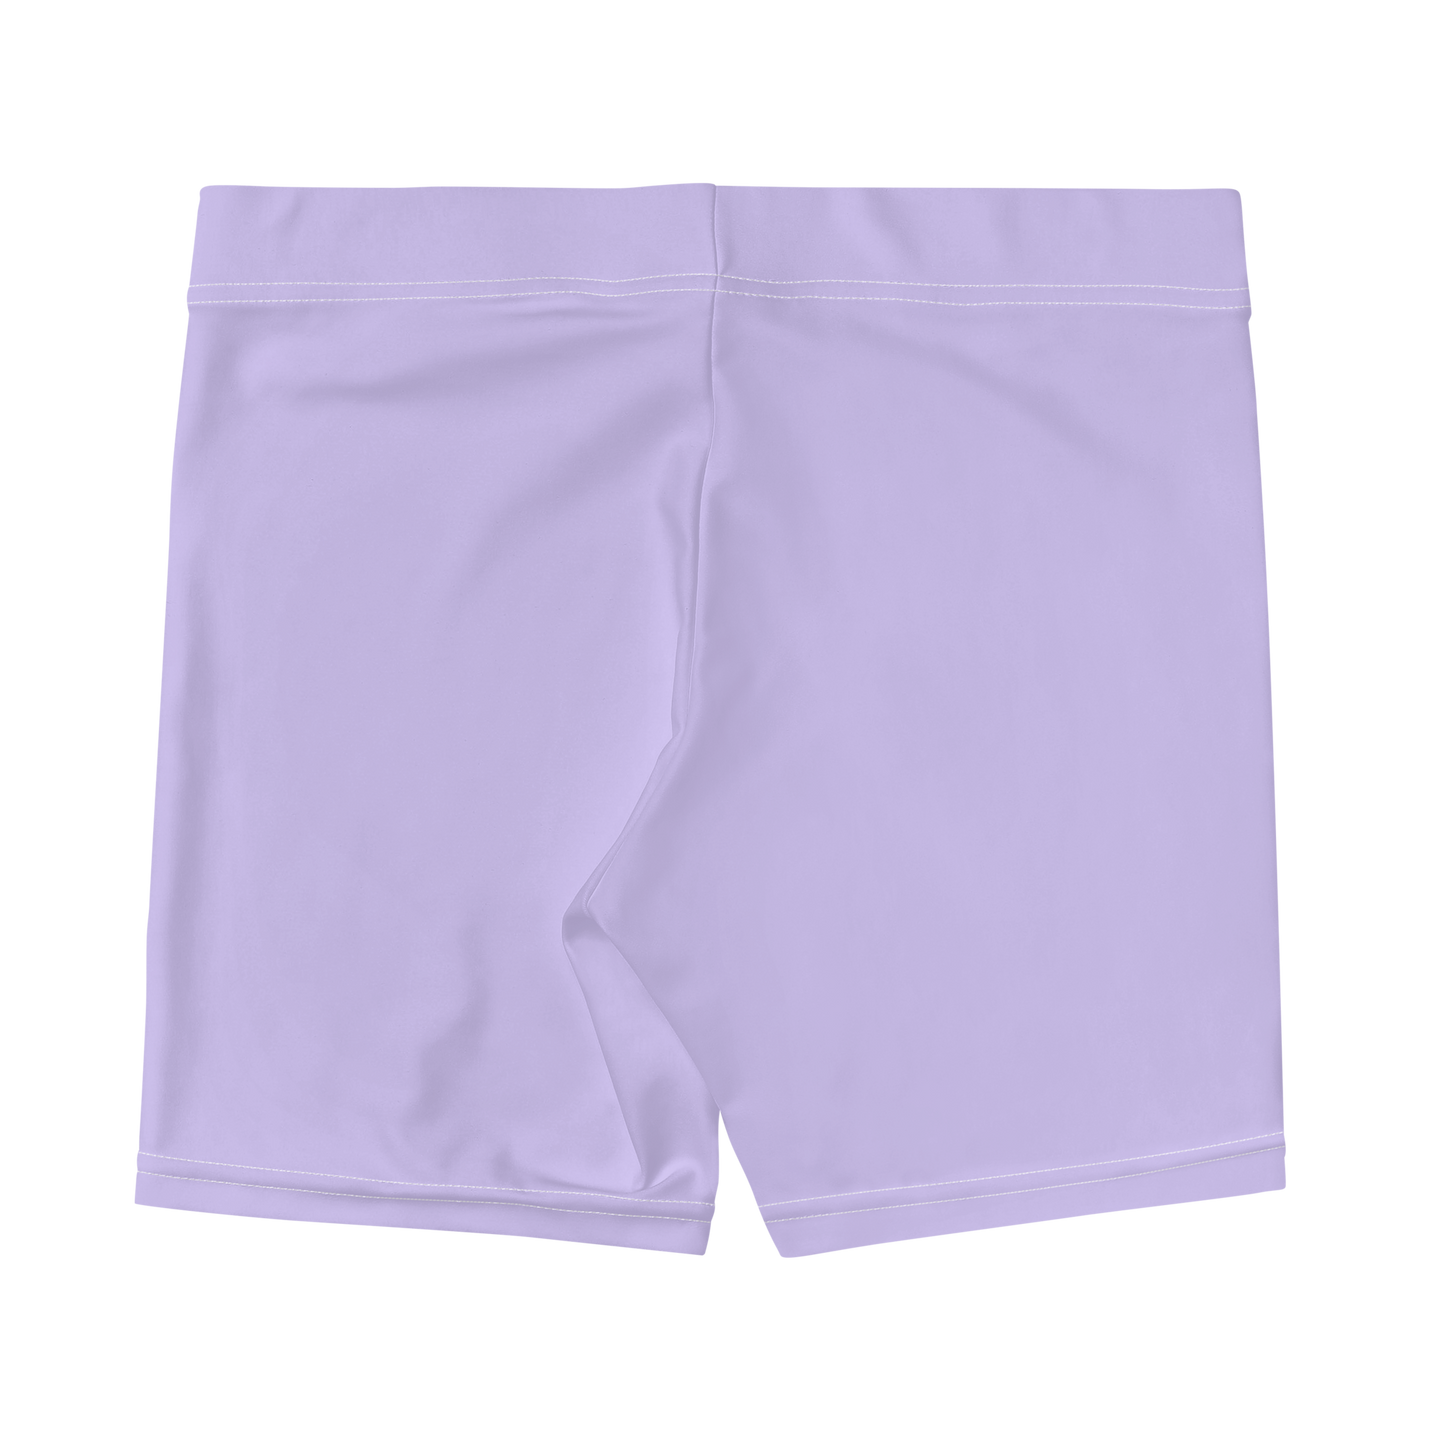 Mint Athletic Lavender Shorts